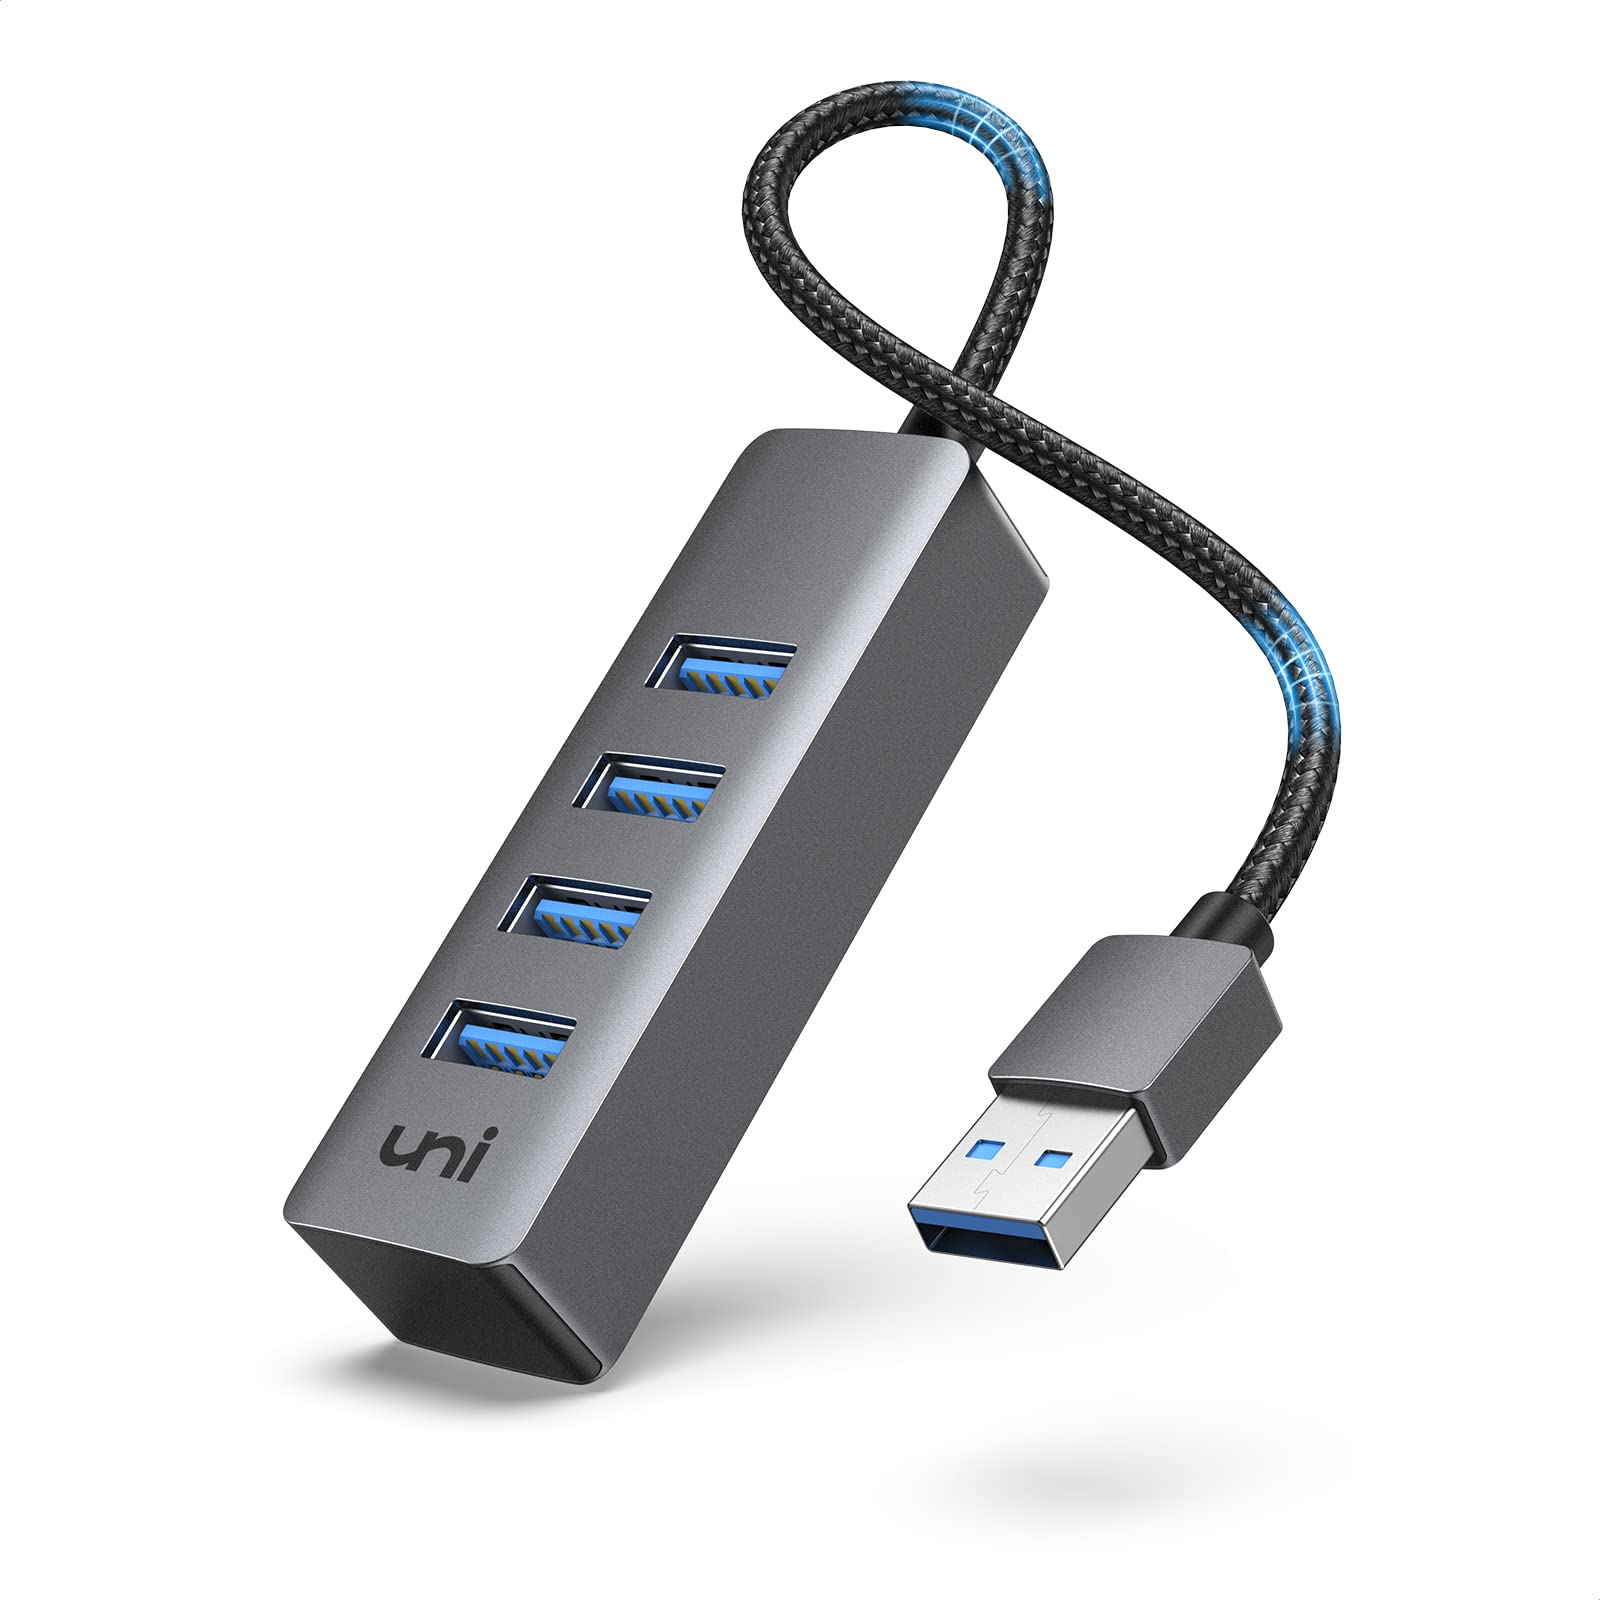 uni USB Hub 4-Port USB Splitter, High-Speed Portable Aluminum USB 3.0 Hub for $7.99 - Amazon